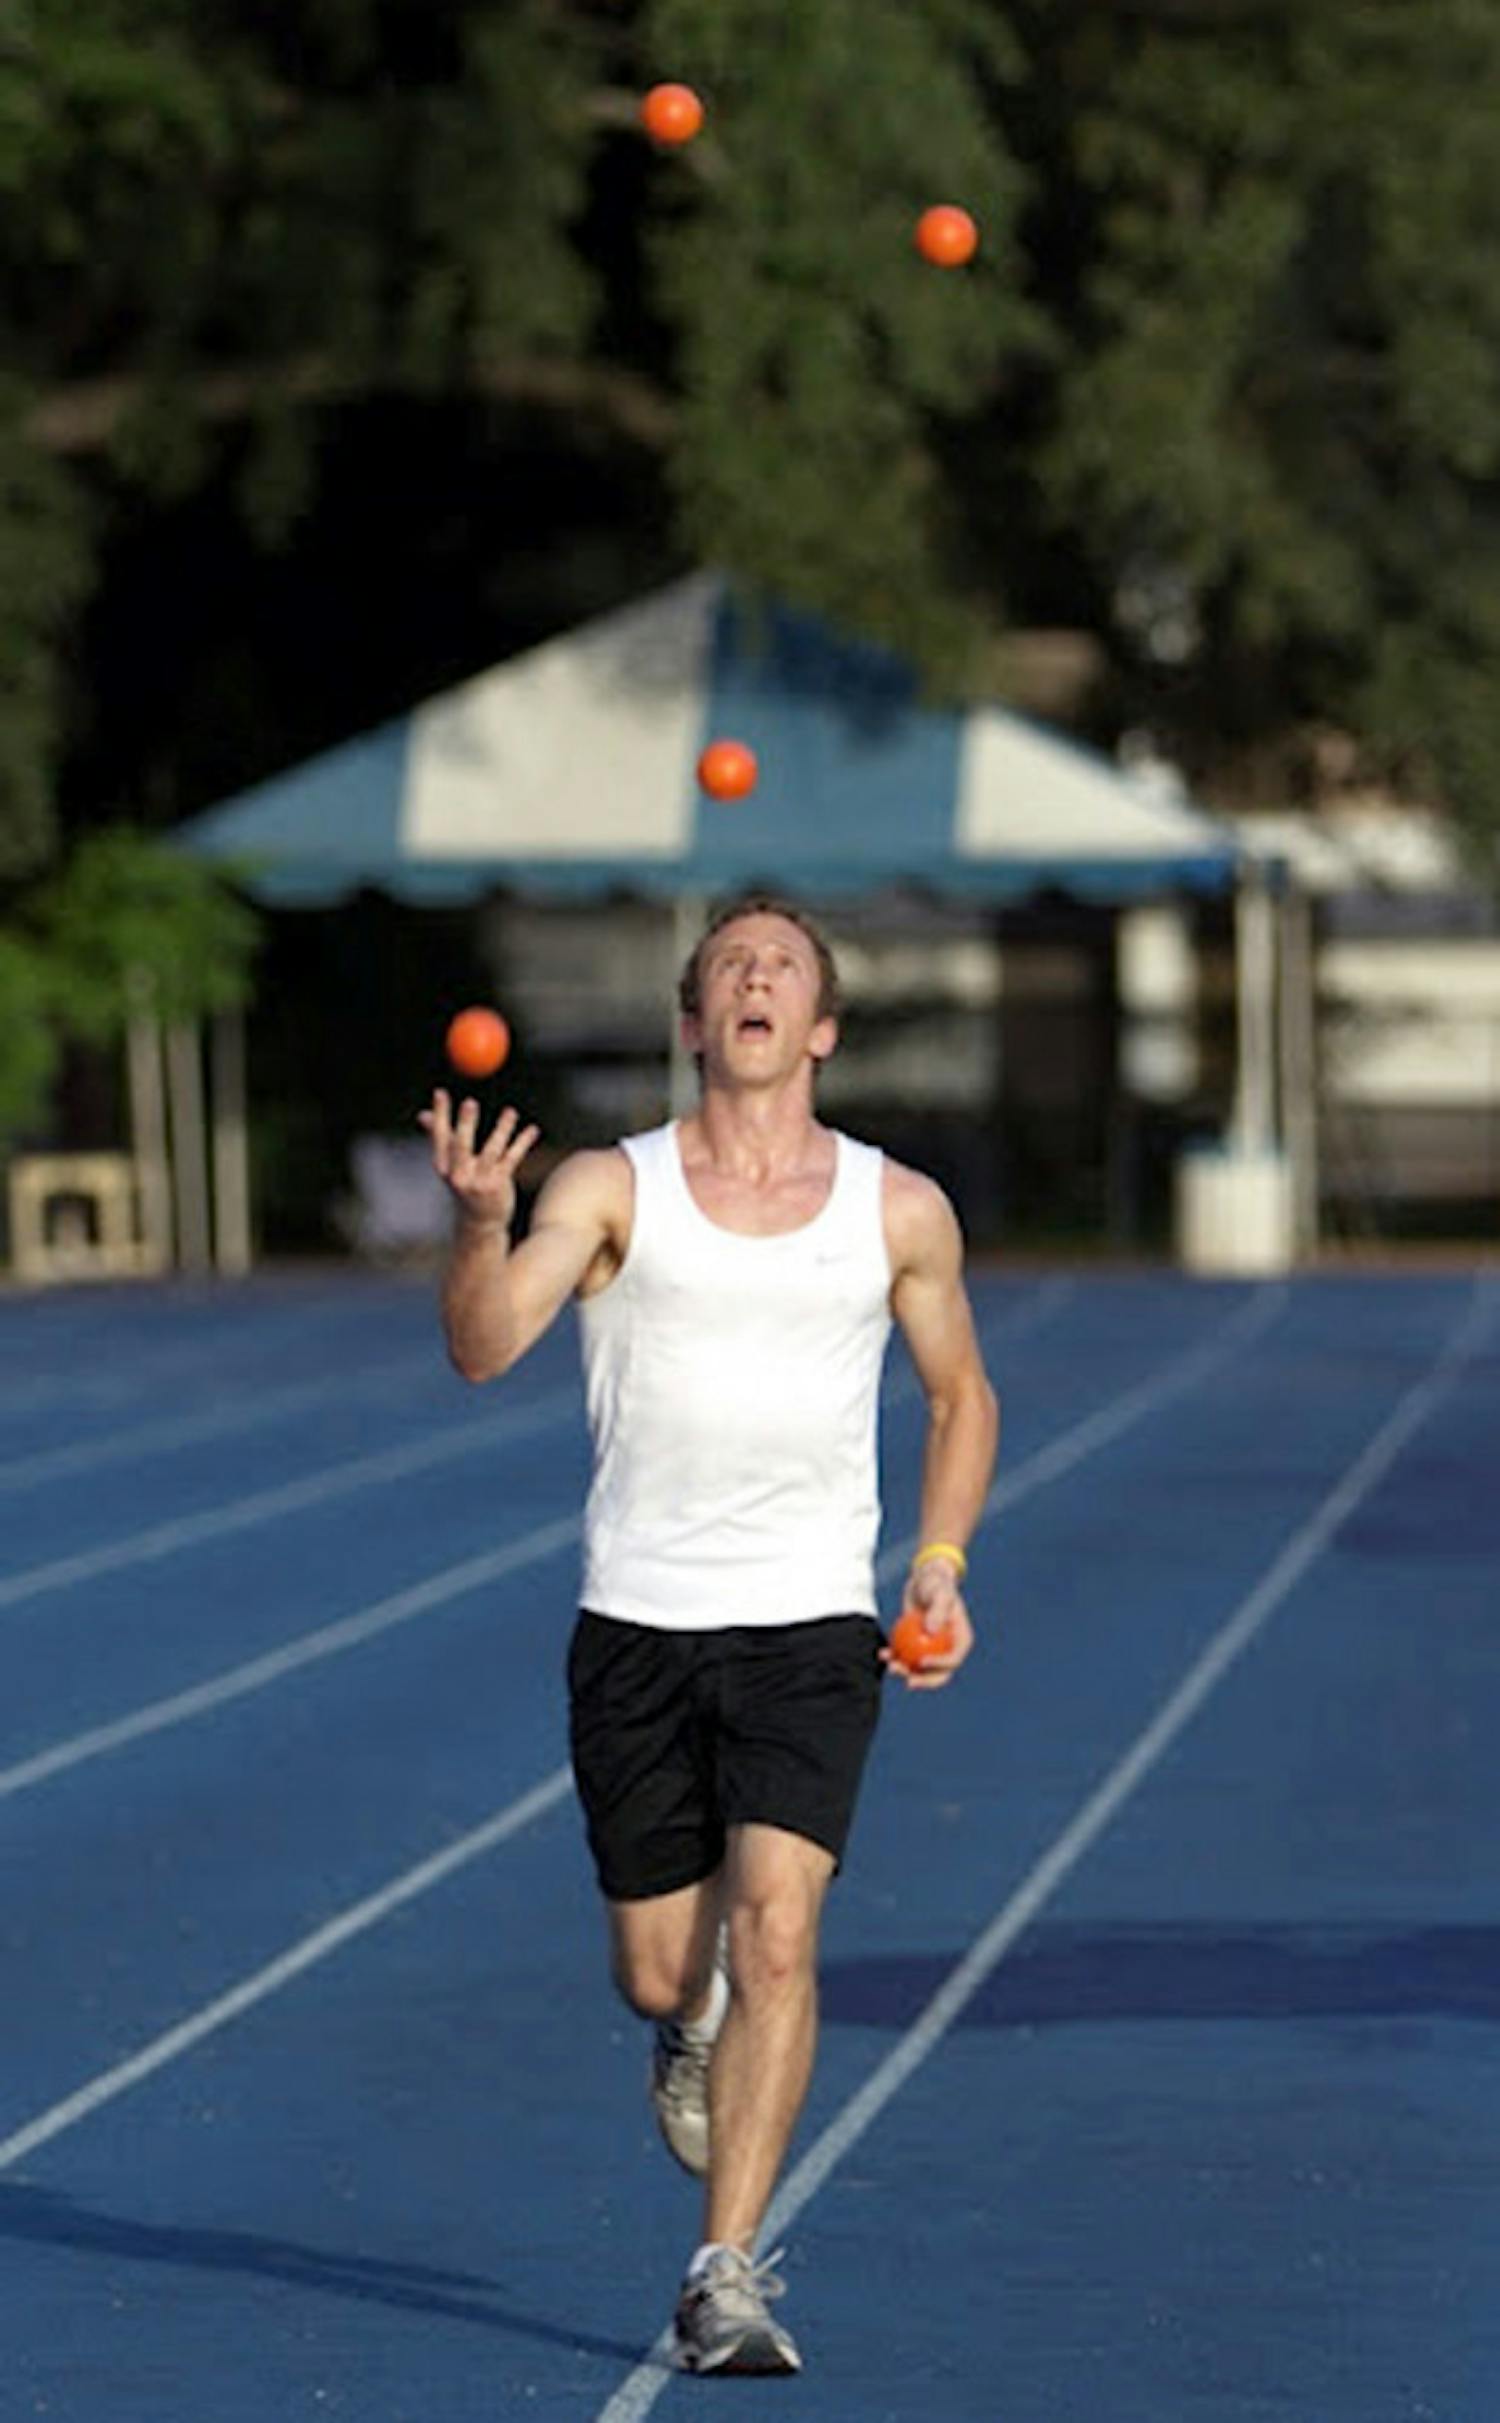 UF junior Matthew Feldman broke the Guinness World Record for five-ball joggling at Rice University Friday.